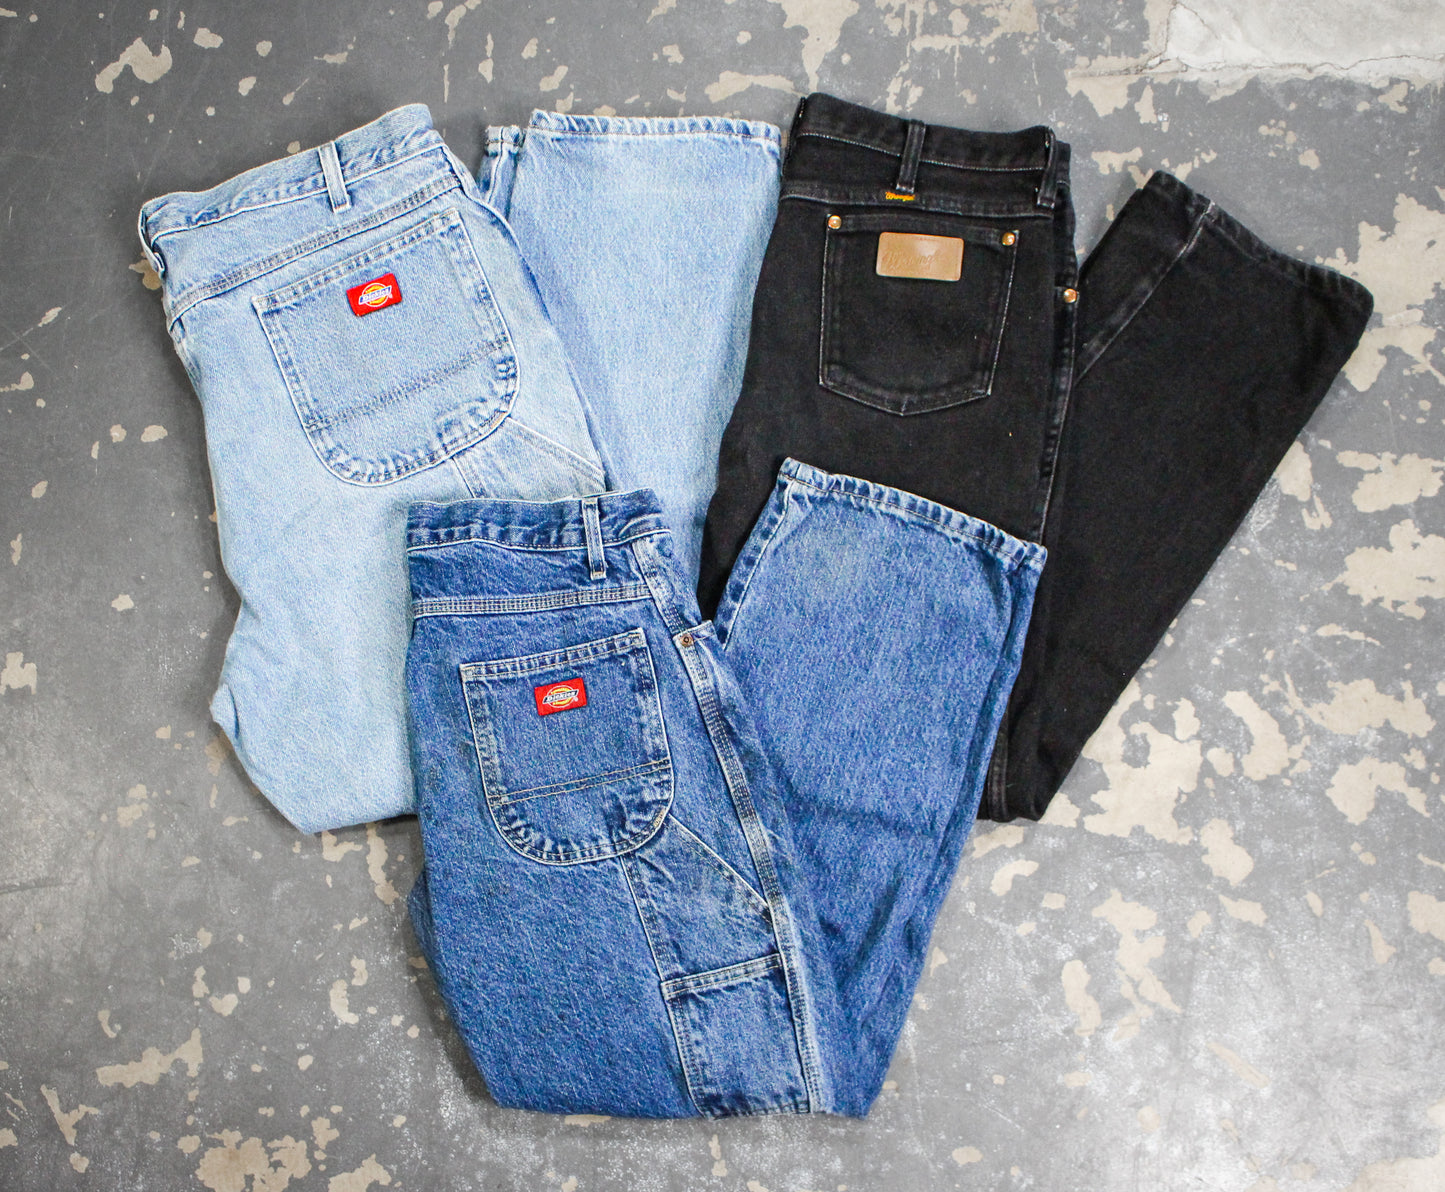 Branded Jeans